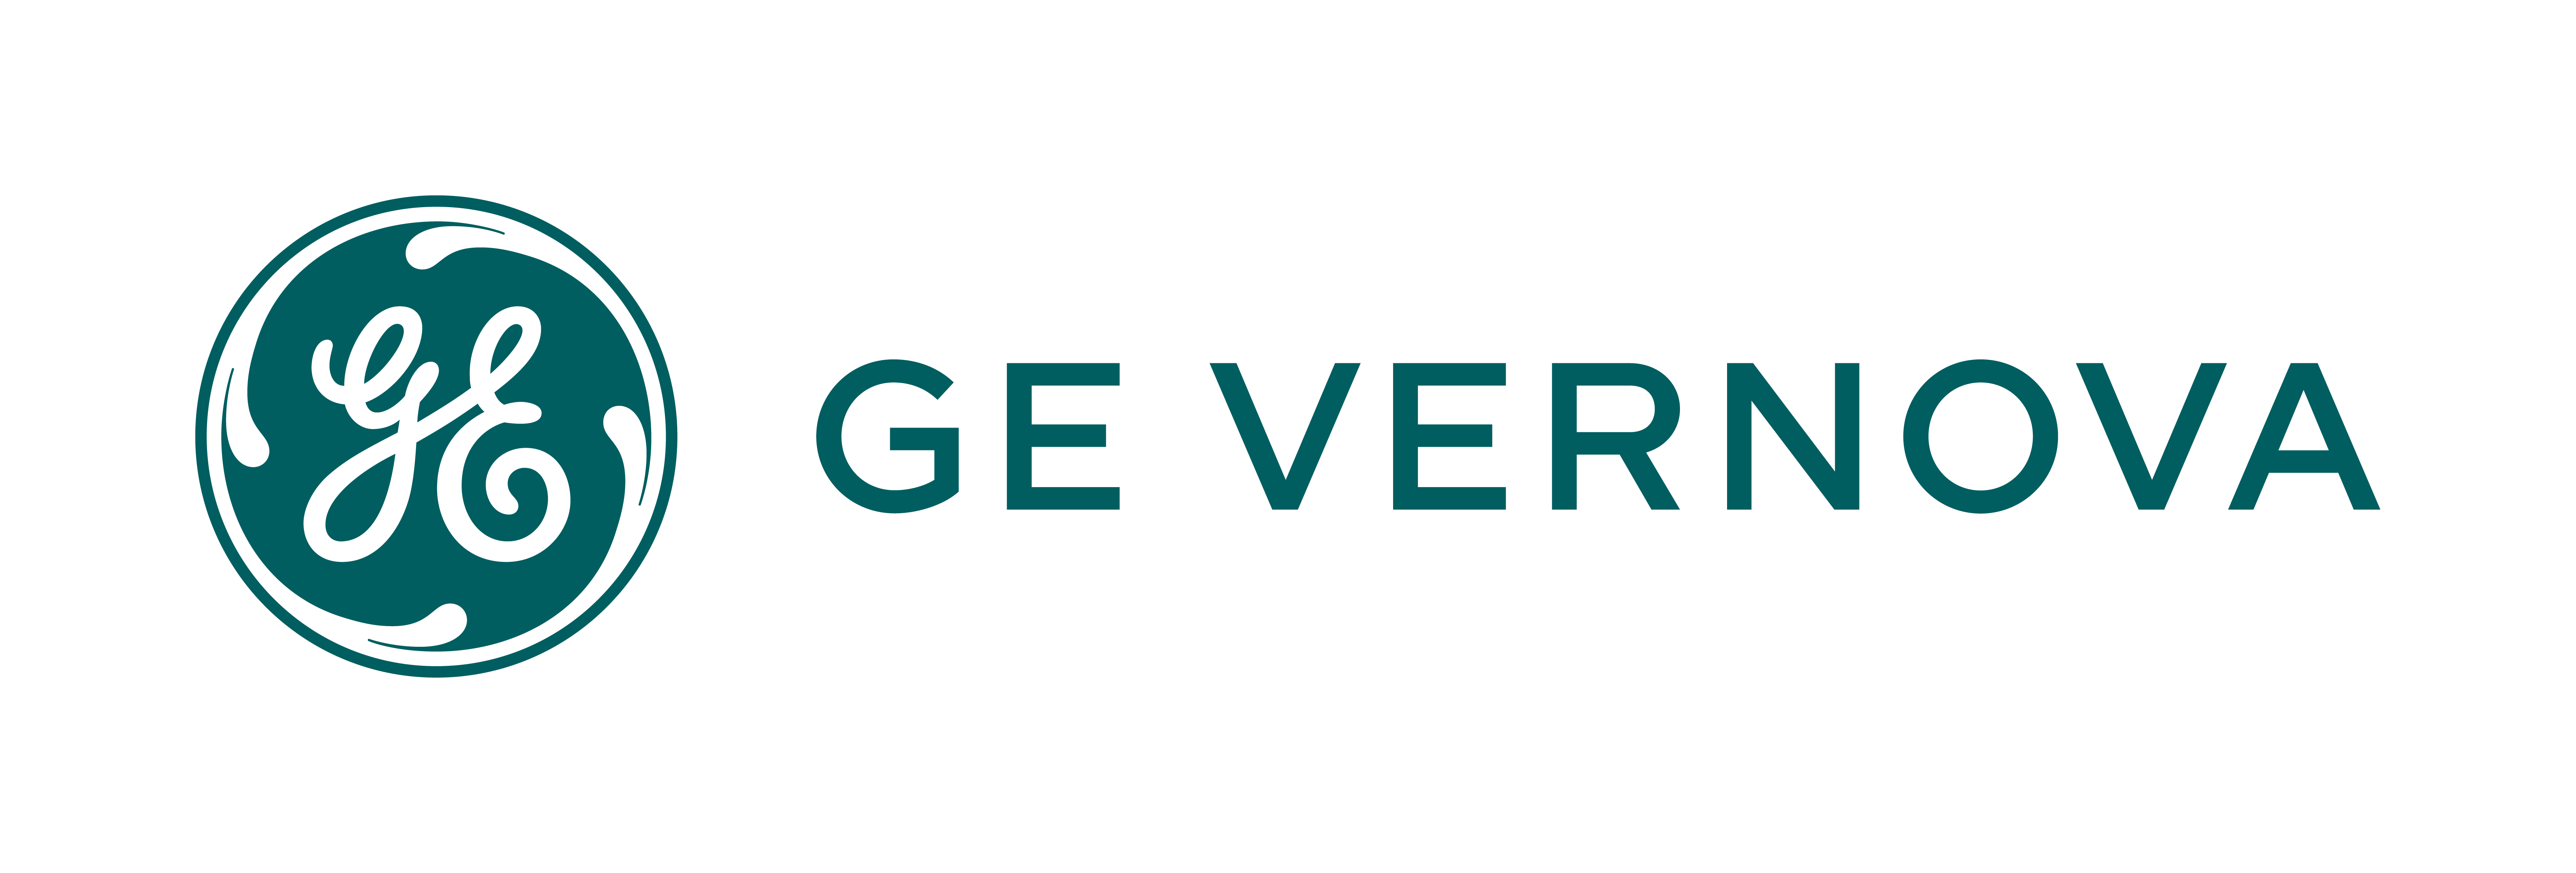 GE_Vernova_Standard_RGB_Evergreen